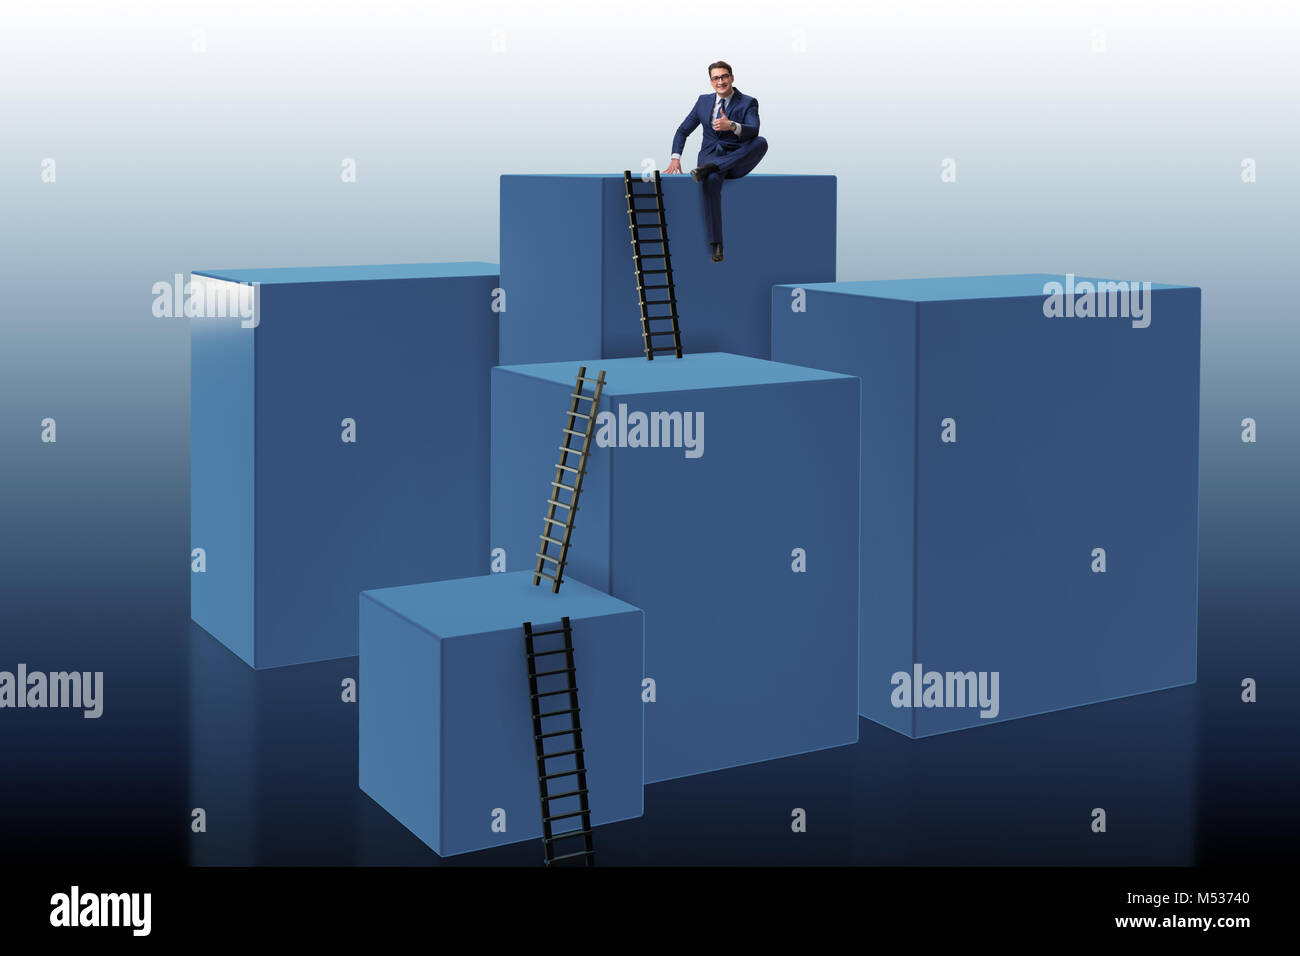 Businessman climbing blocks in challenge business concept Stock Photo